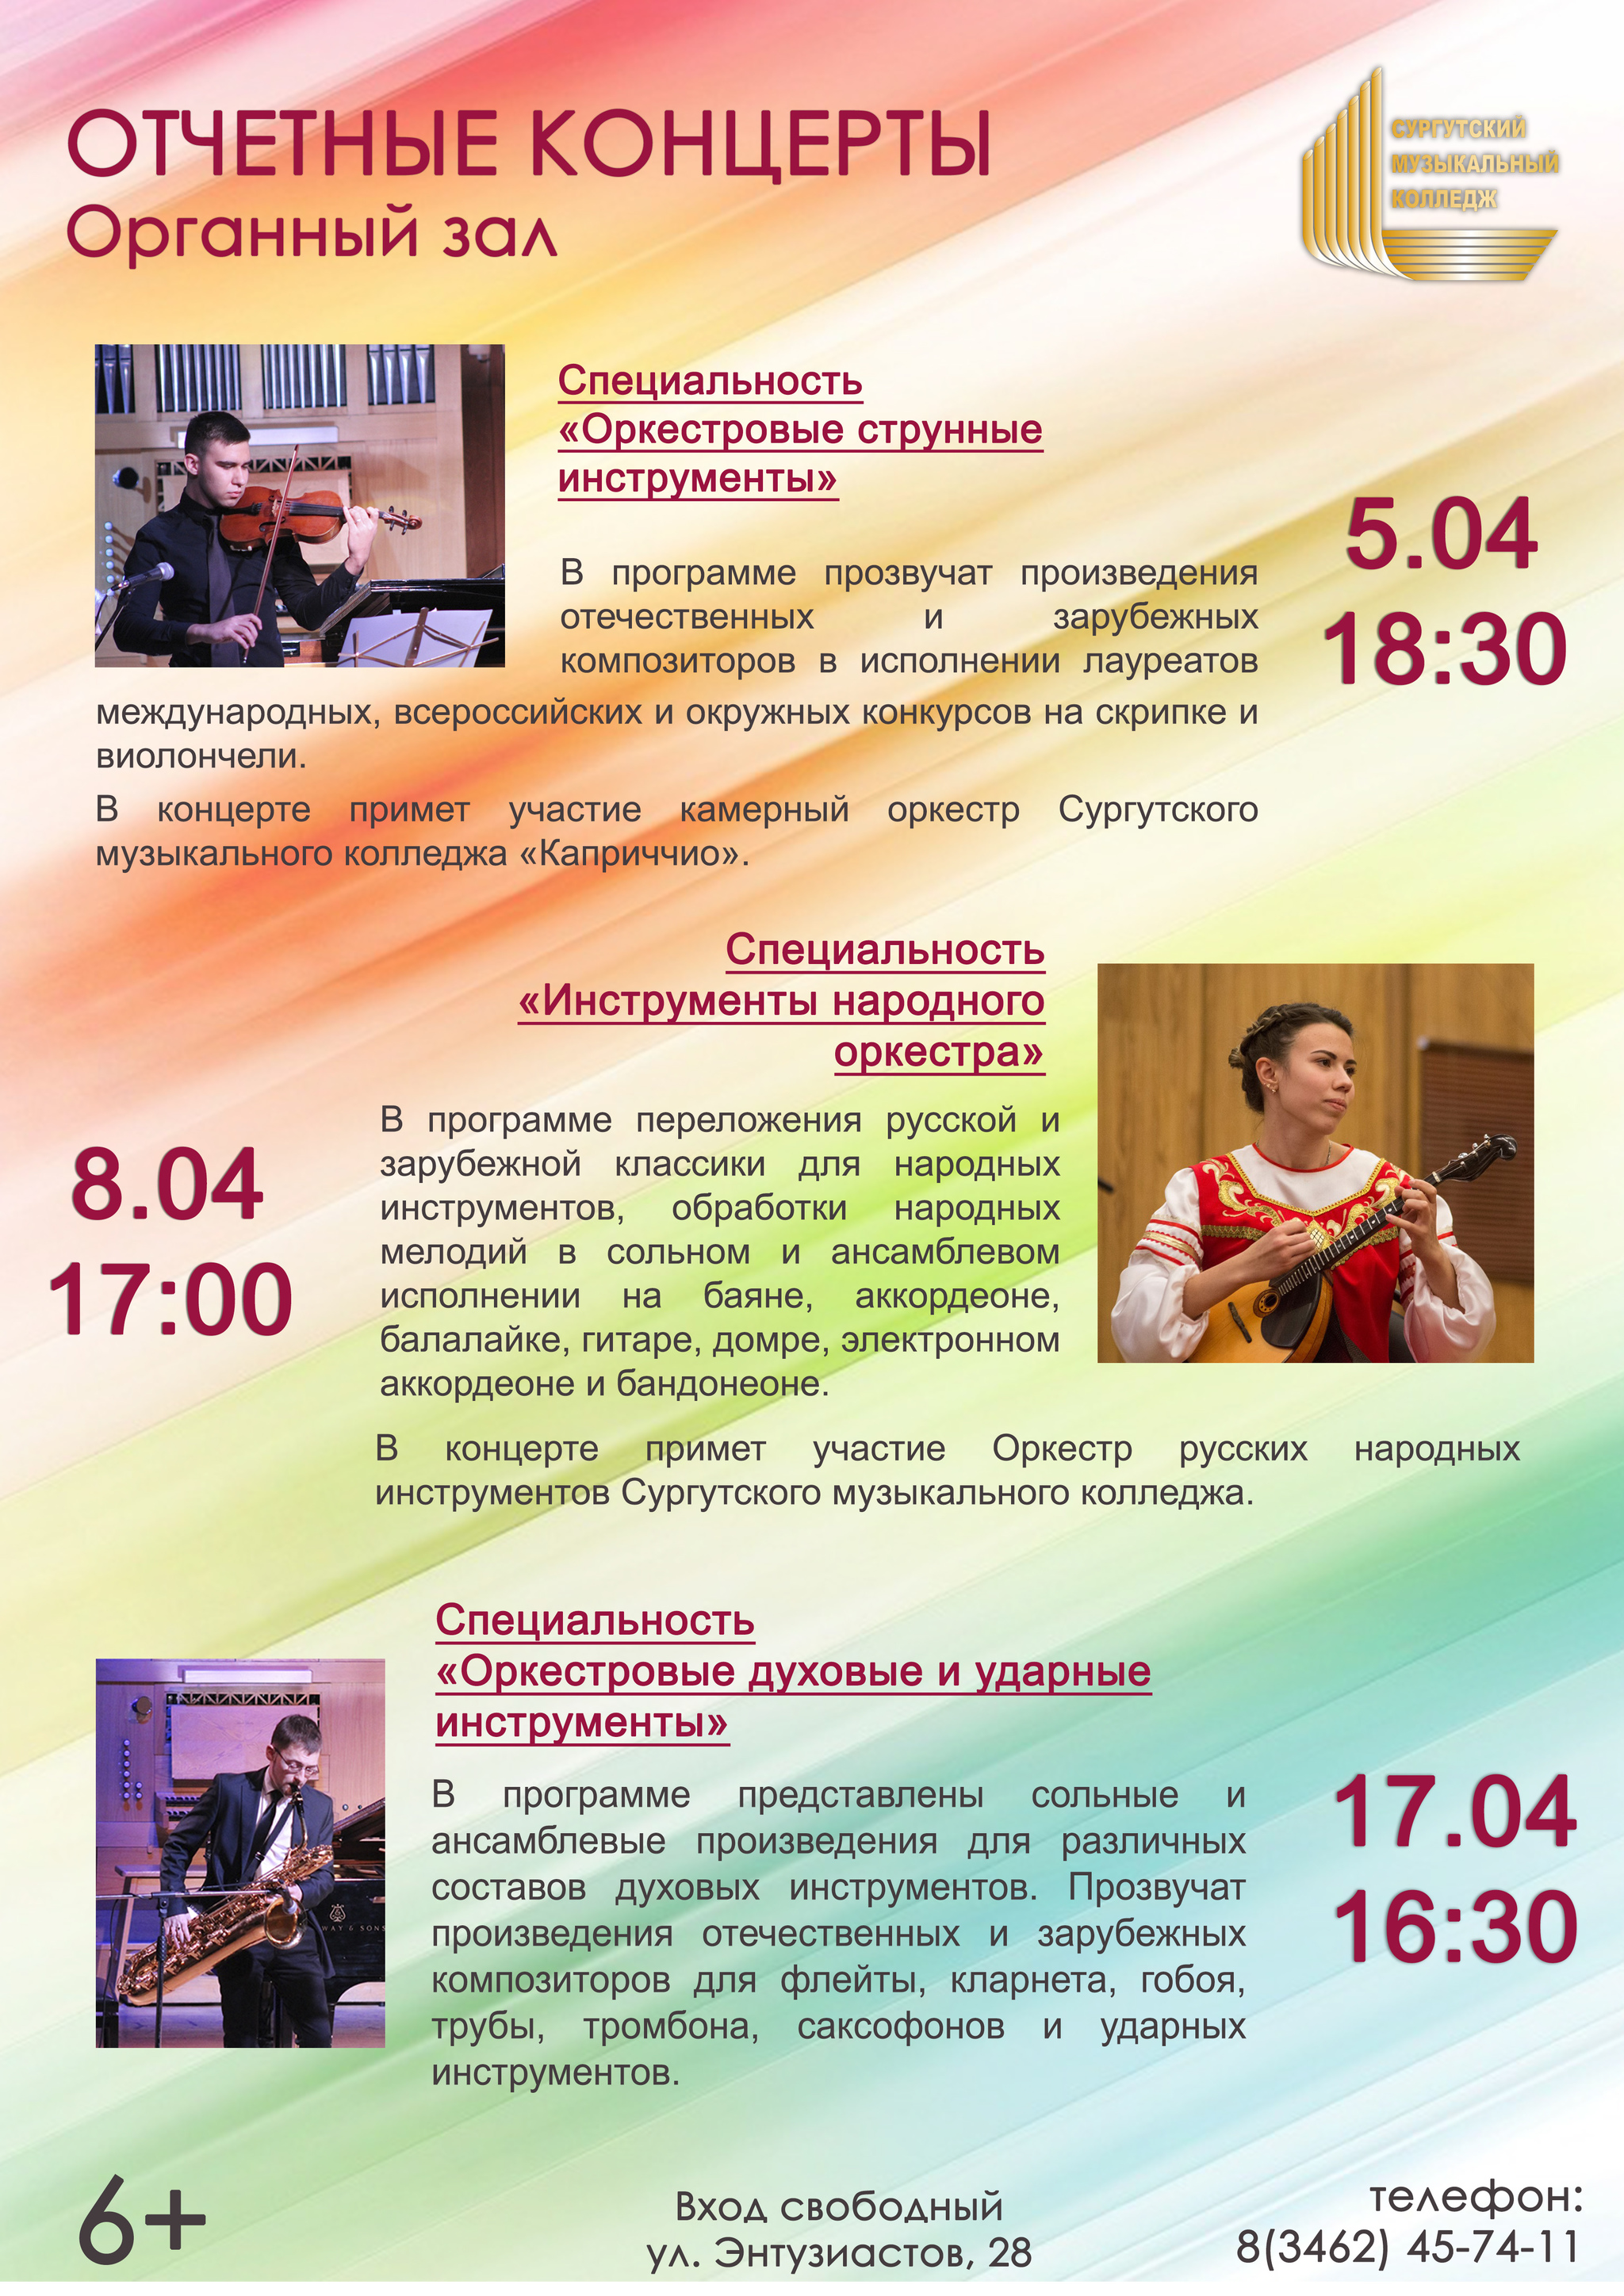 Юные музыканты Сургута предстанут на трех отчетных концертах